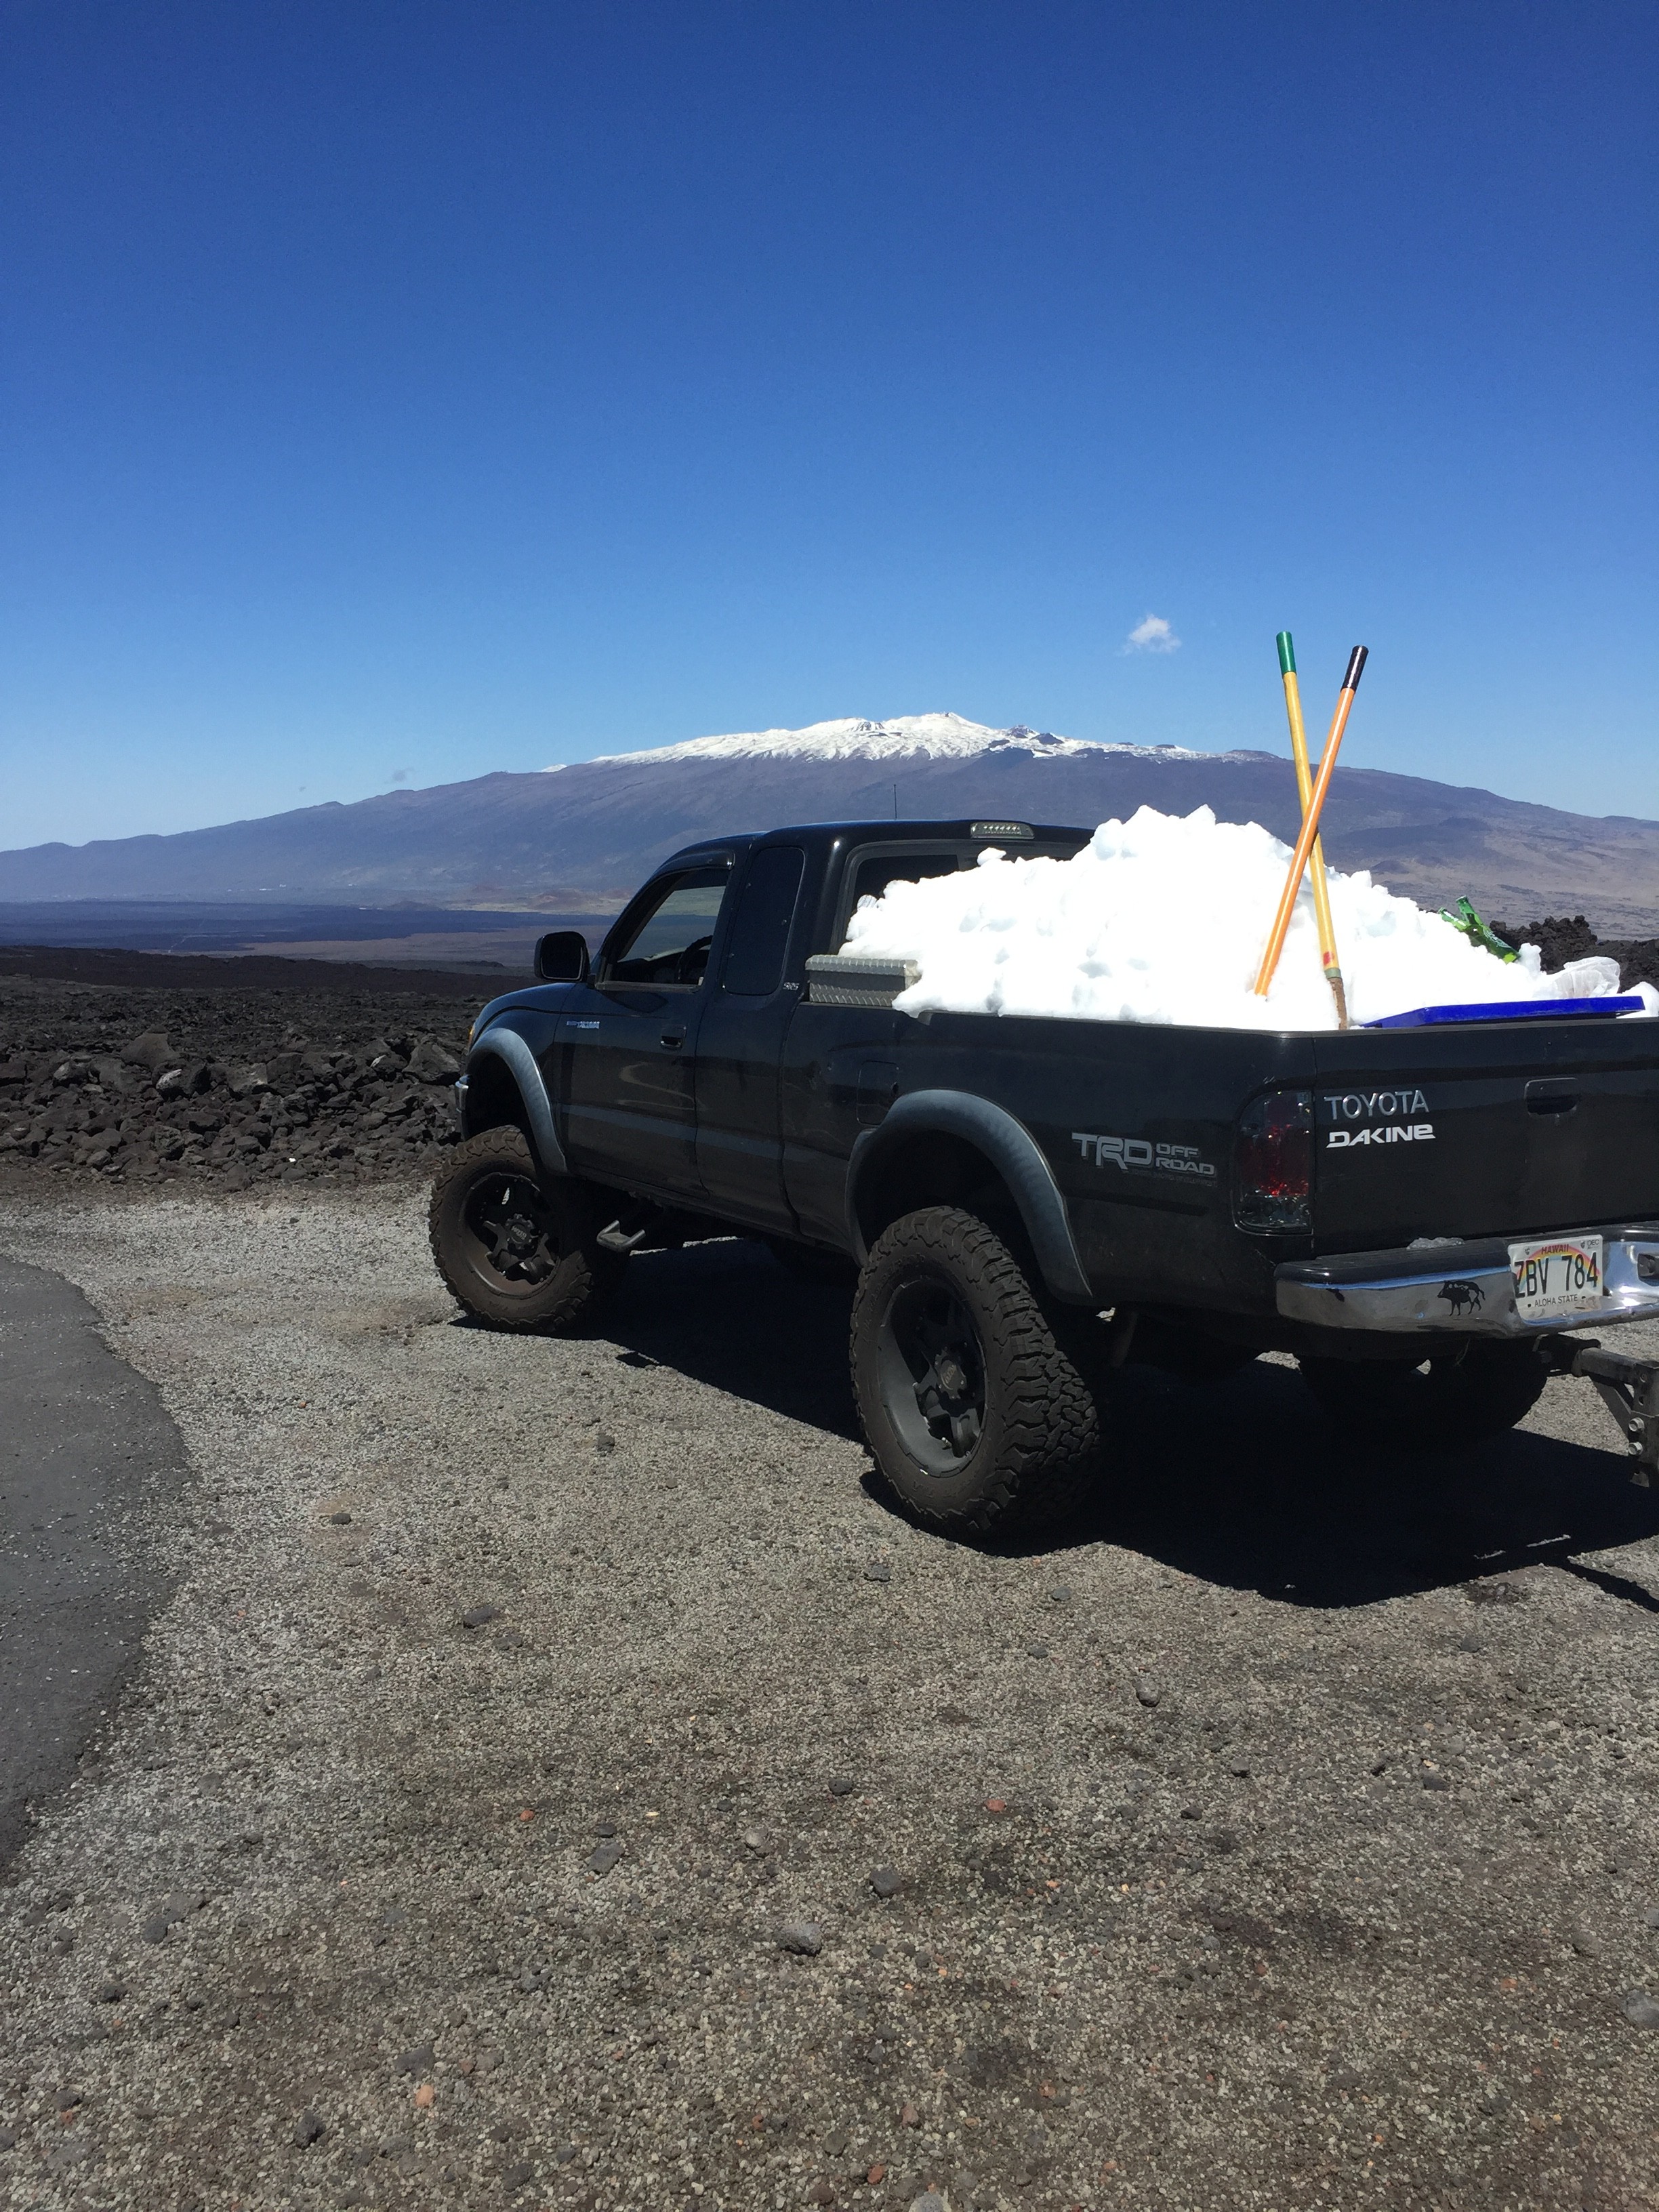 Mauna Loa snow on 3.15.15 / Image: Rochelle Hunt